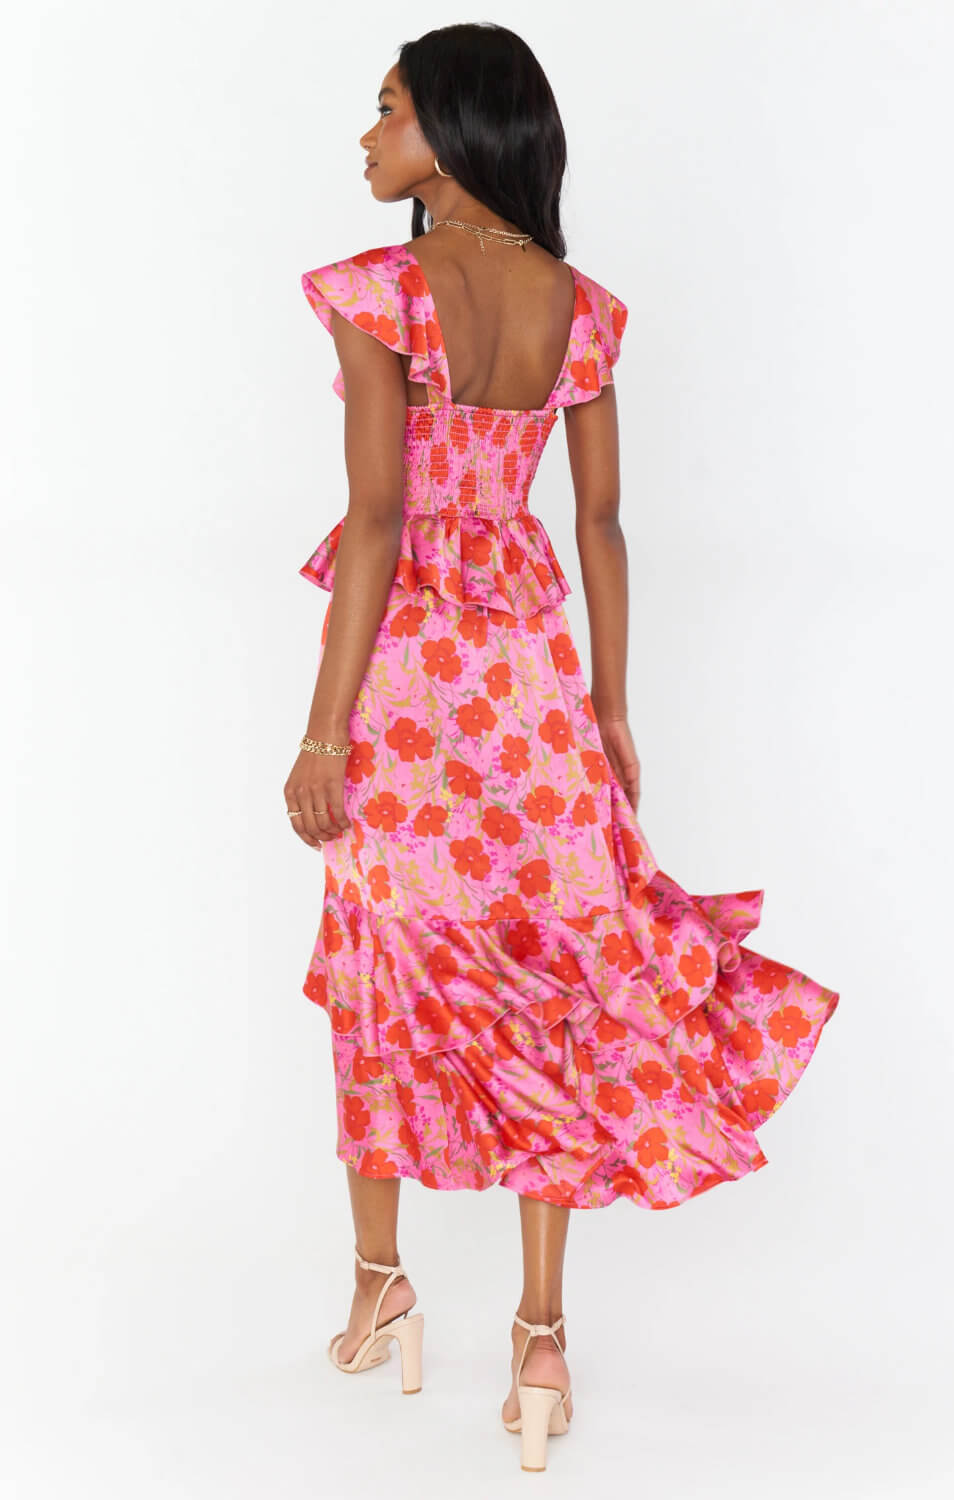 Elegant Honeymoon Dresses Chic Honeymoon Outfits Floral Print Ruffle Dress 3